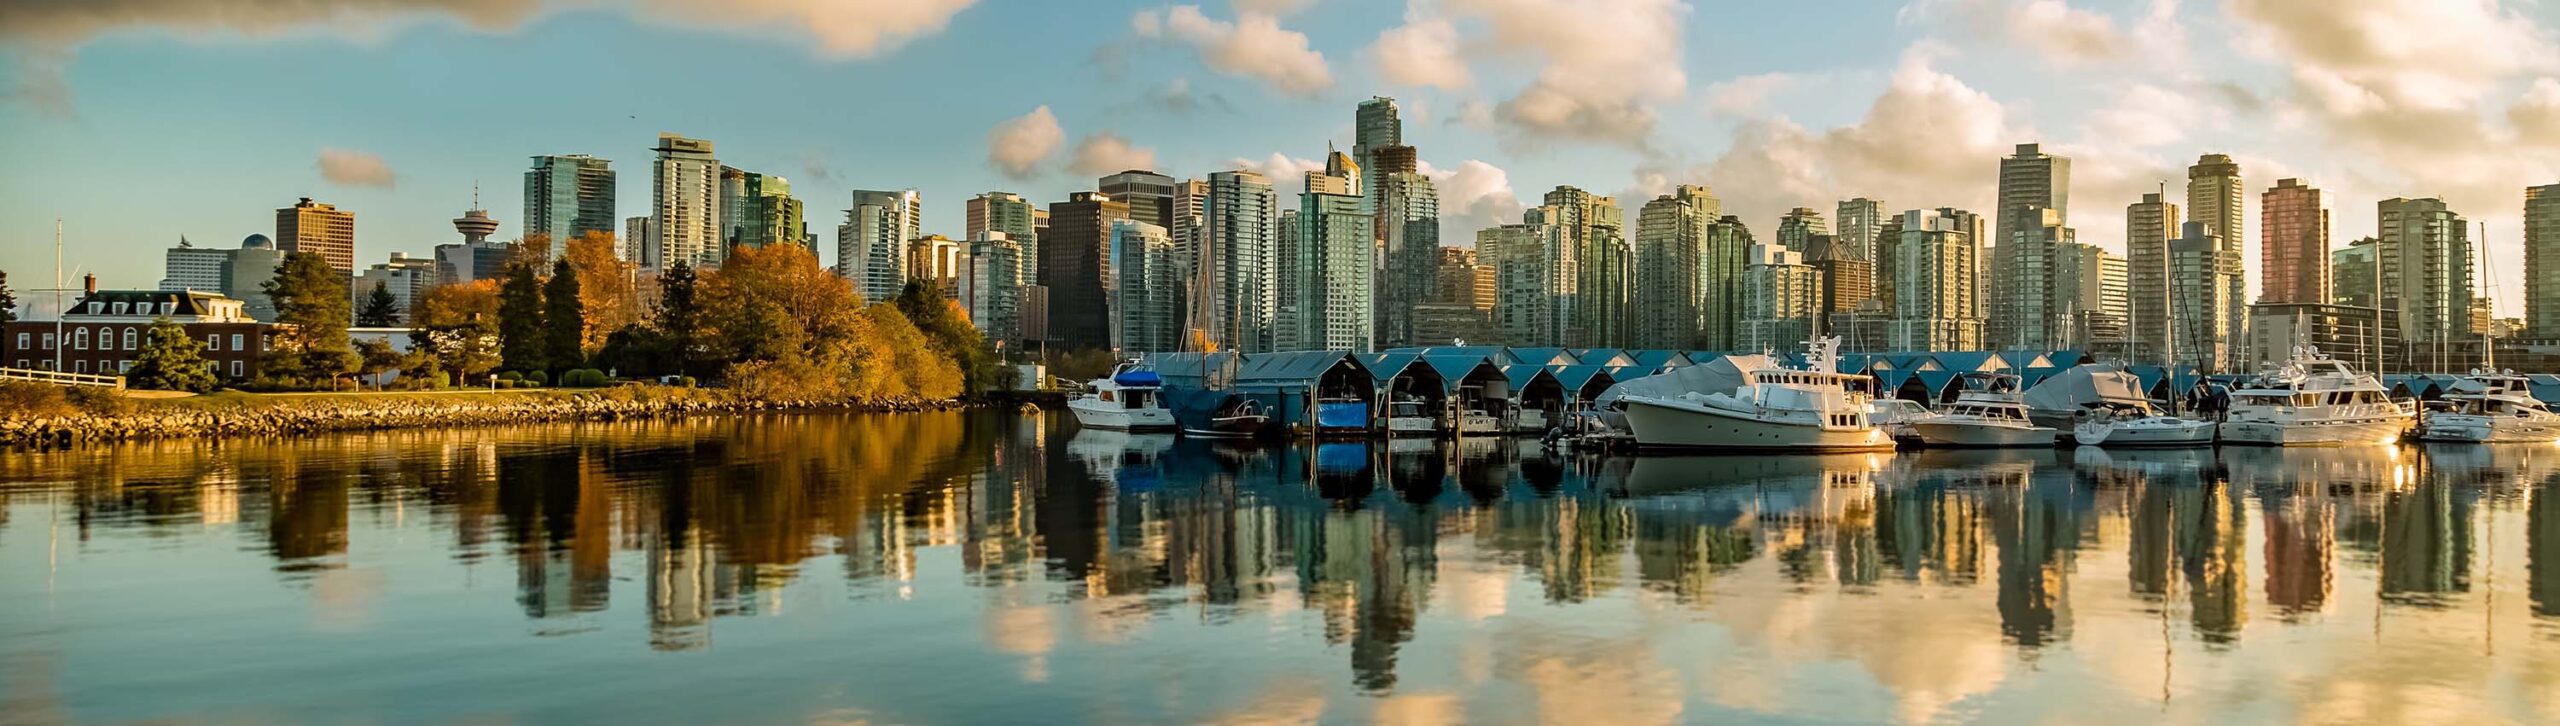 Visit beautiful British Columbia - Vancouver for work